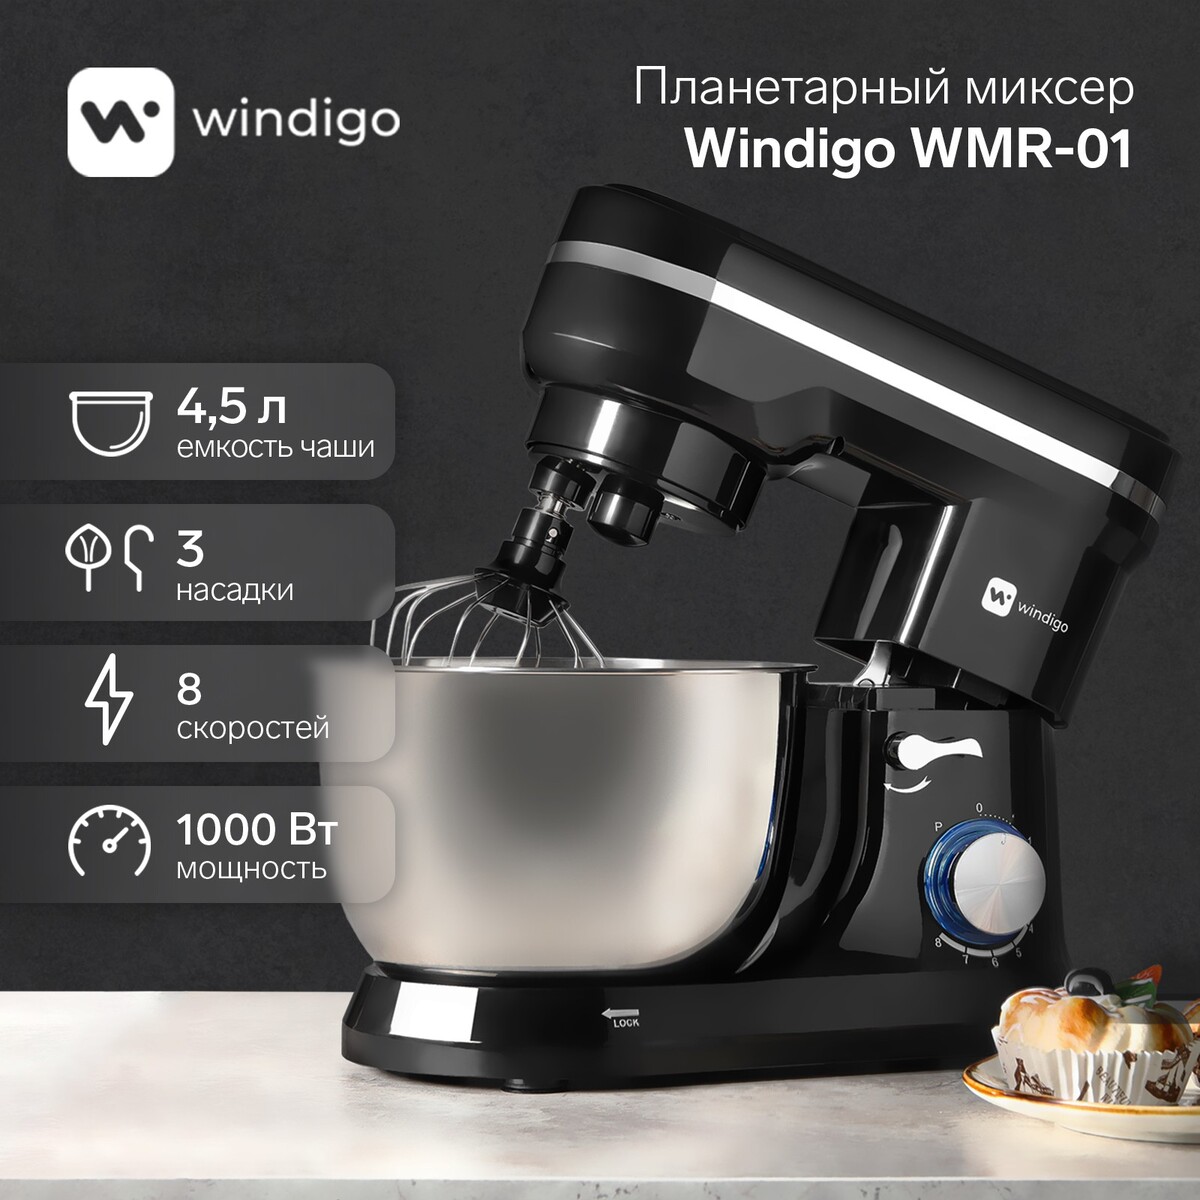  windigo wmr-01, , 1000 , 4.5 , 8 , 3 , 